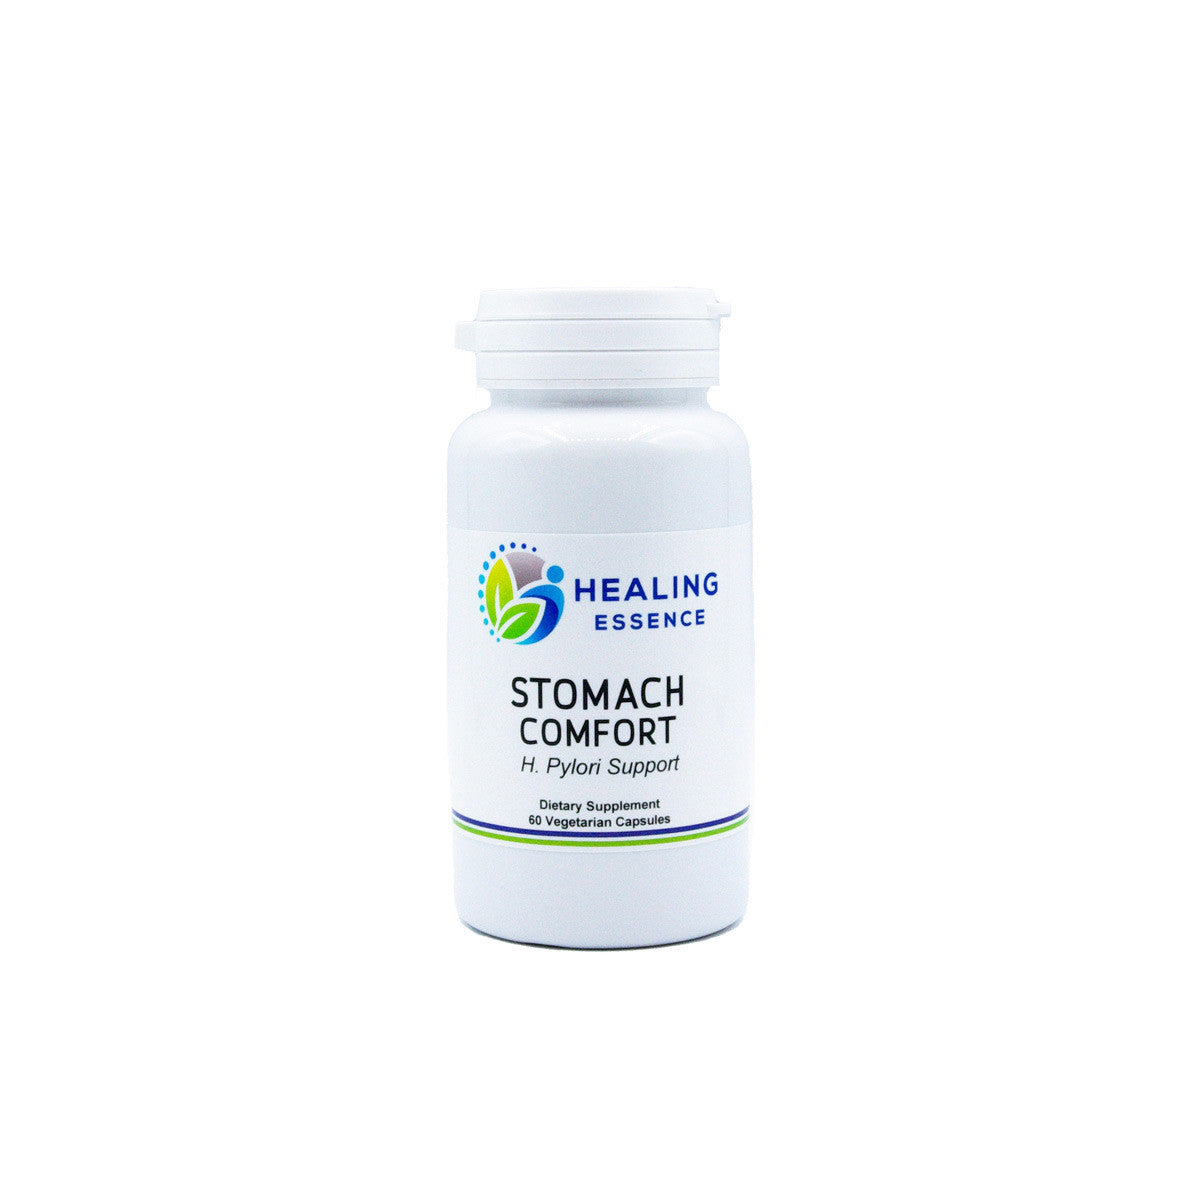 Stomach Comfort (H. pylori Support)